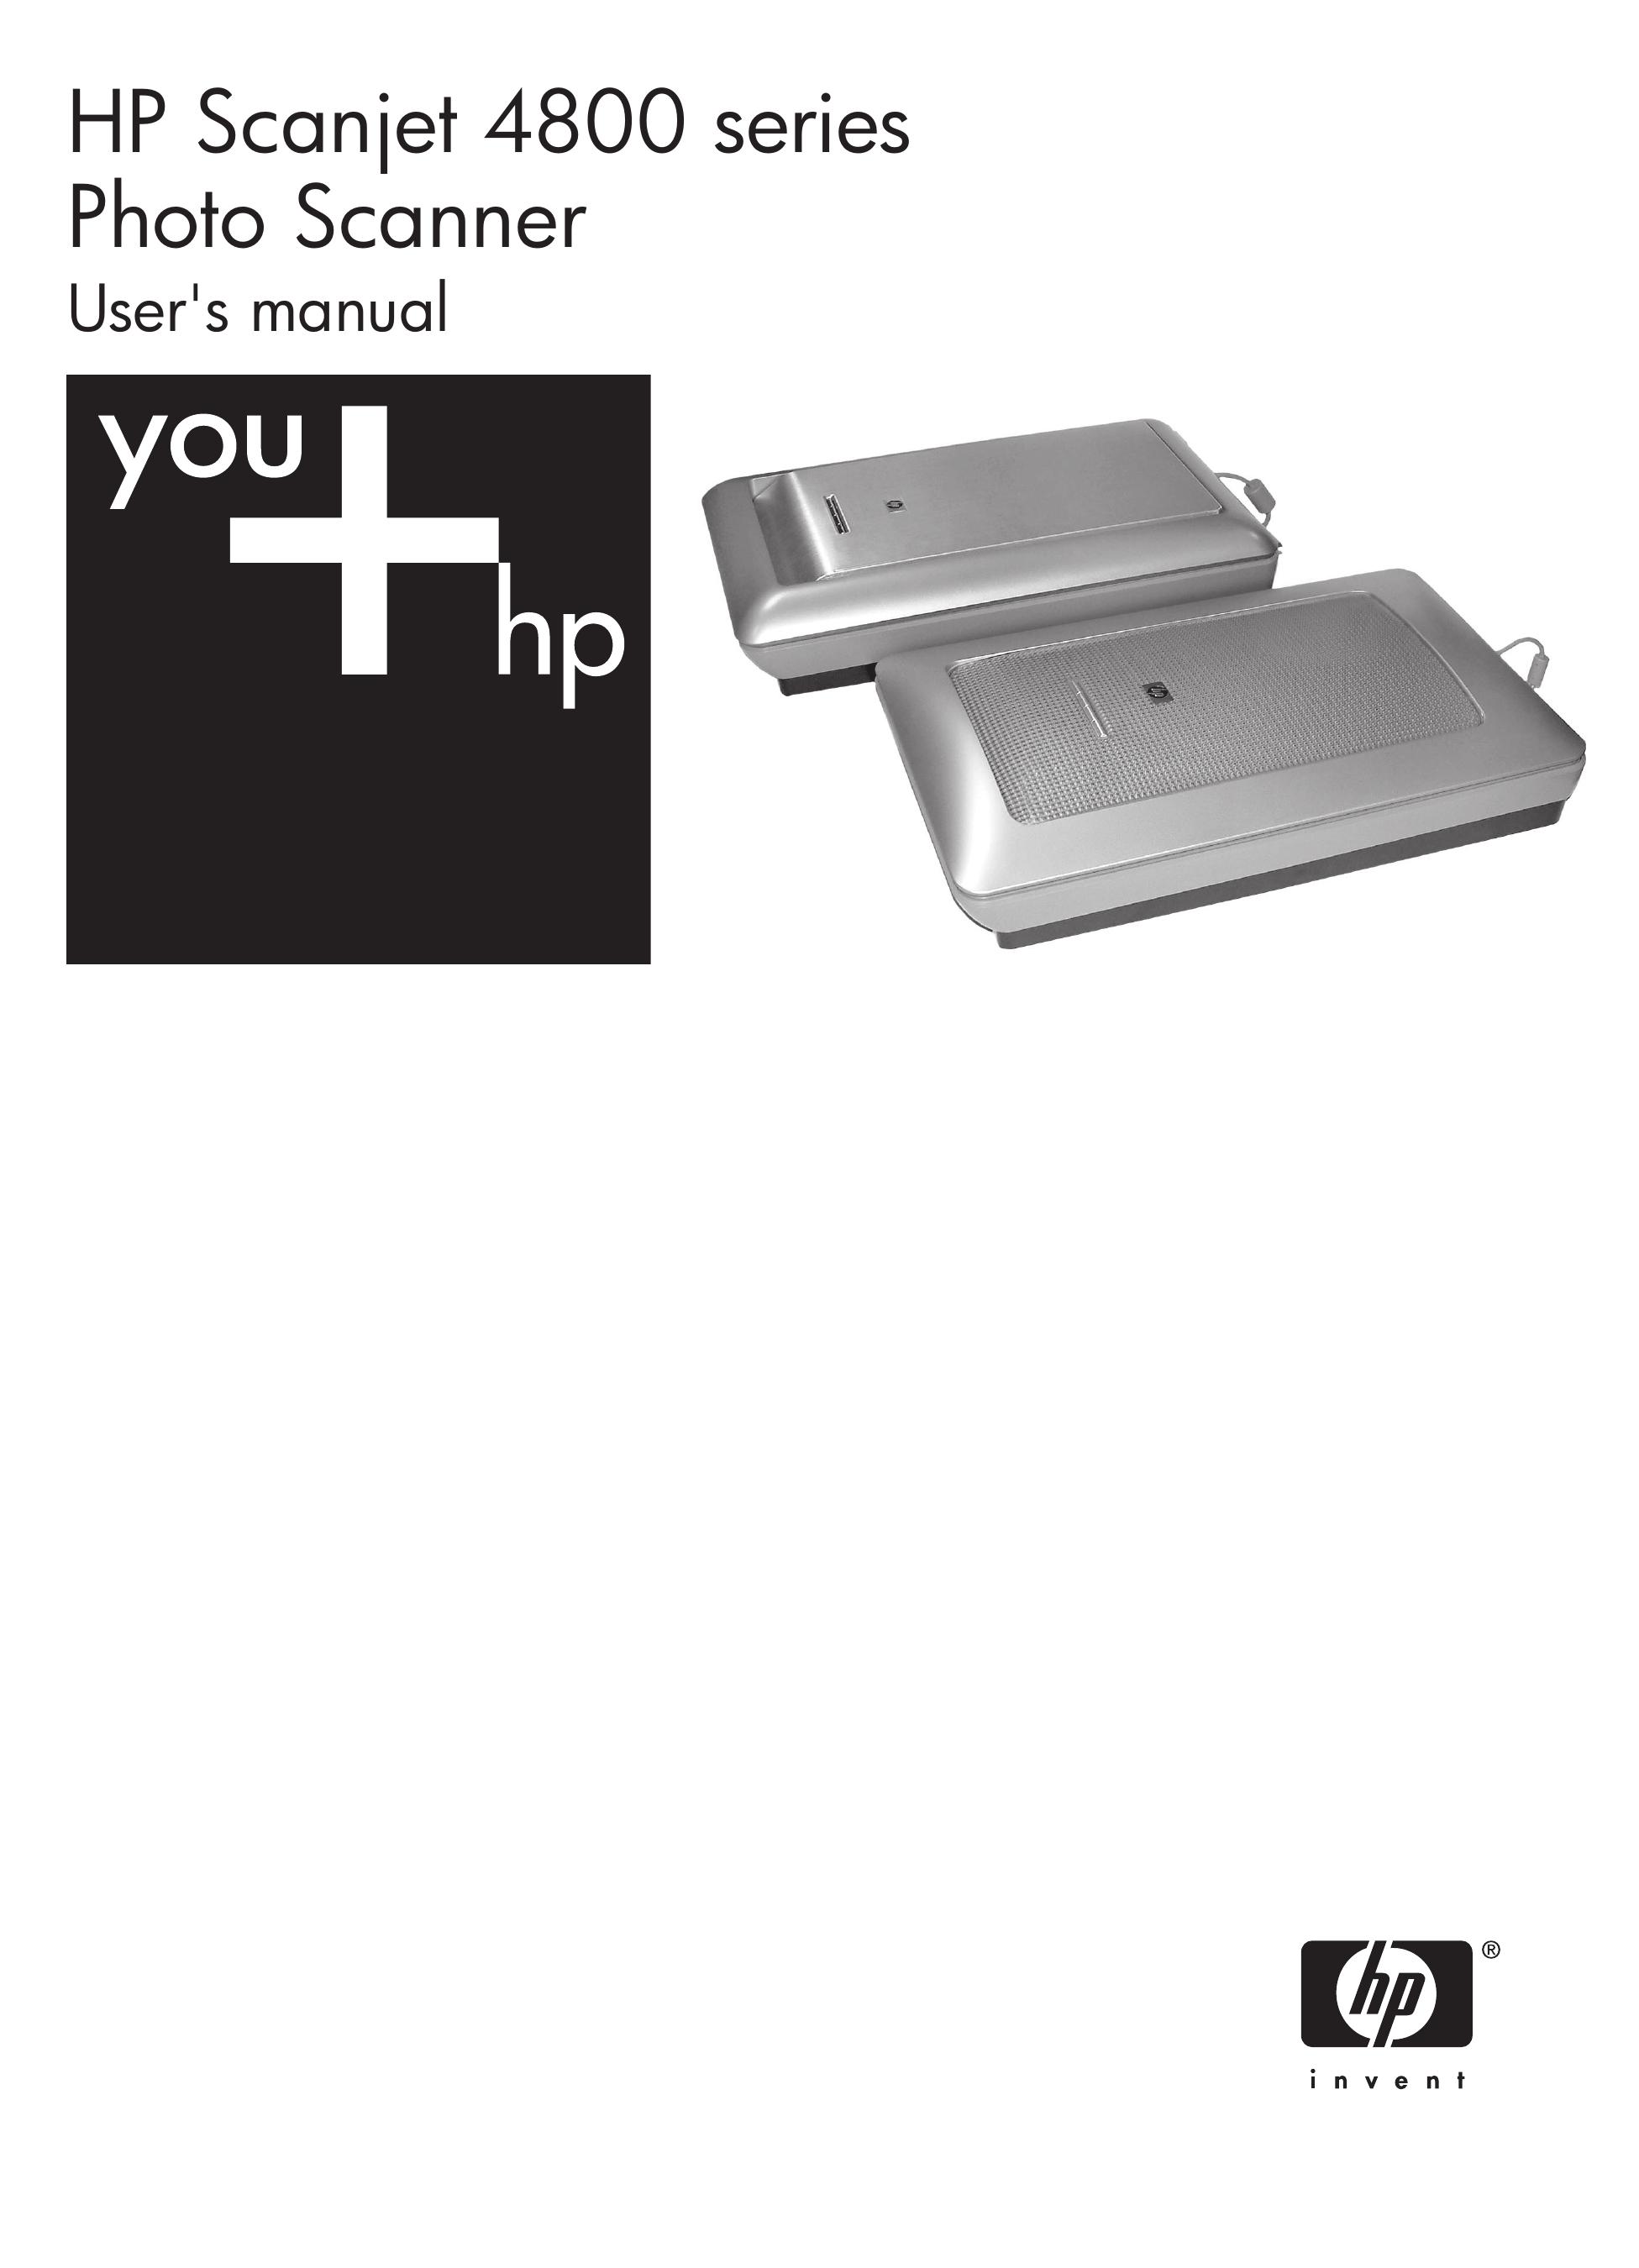 HP (Hewlett-Packard) 4800 Series Photo Scanner User Manual